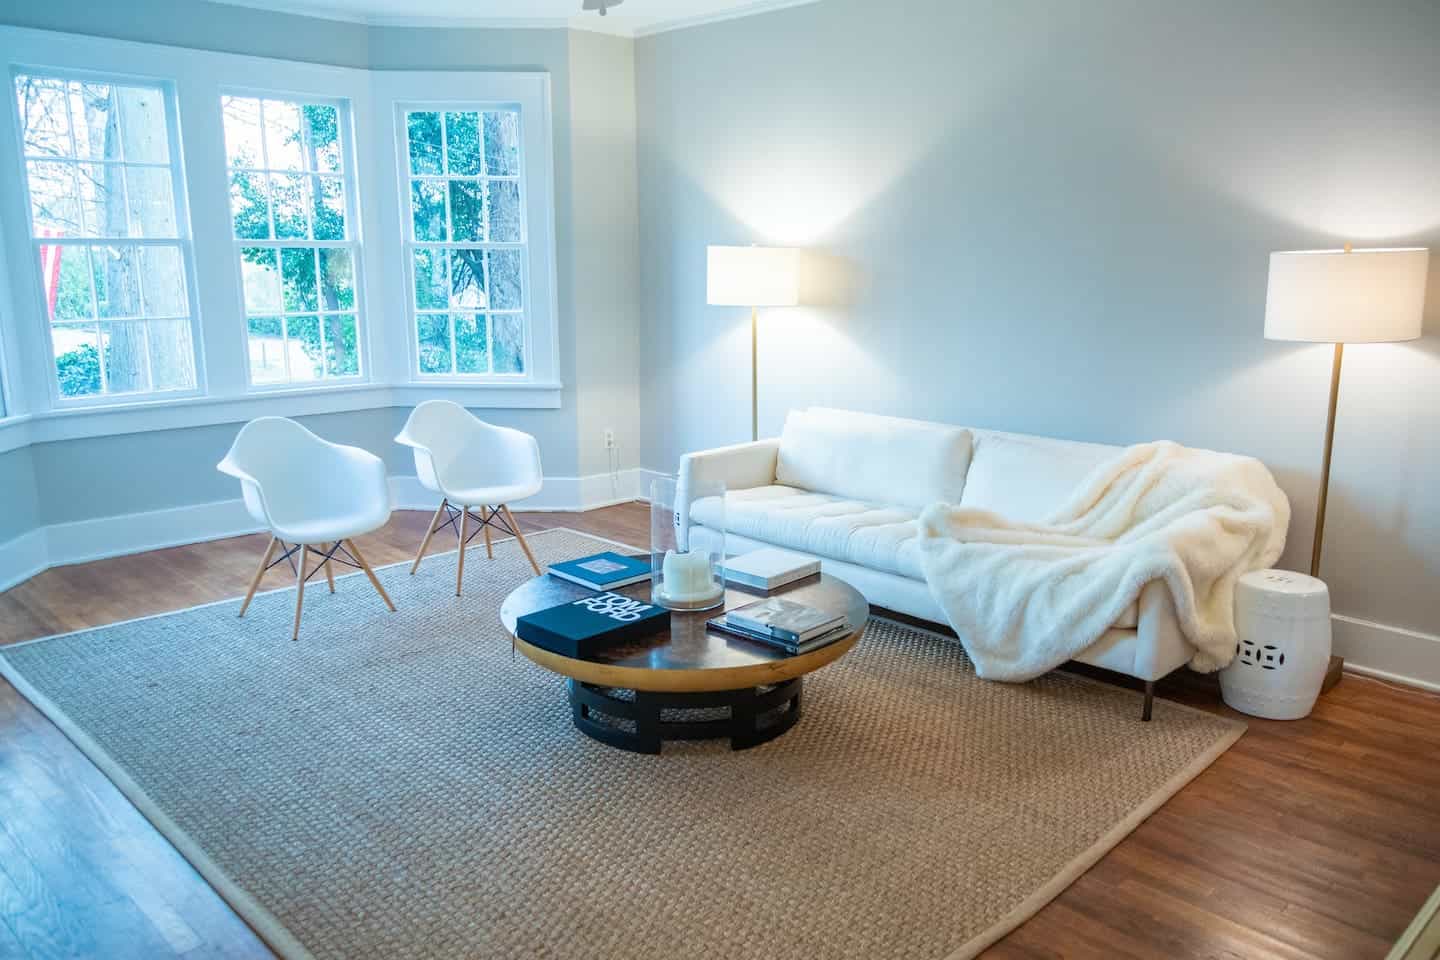 Image of Airbnb rental in Augusta, Georgia